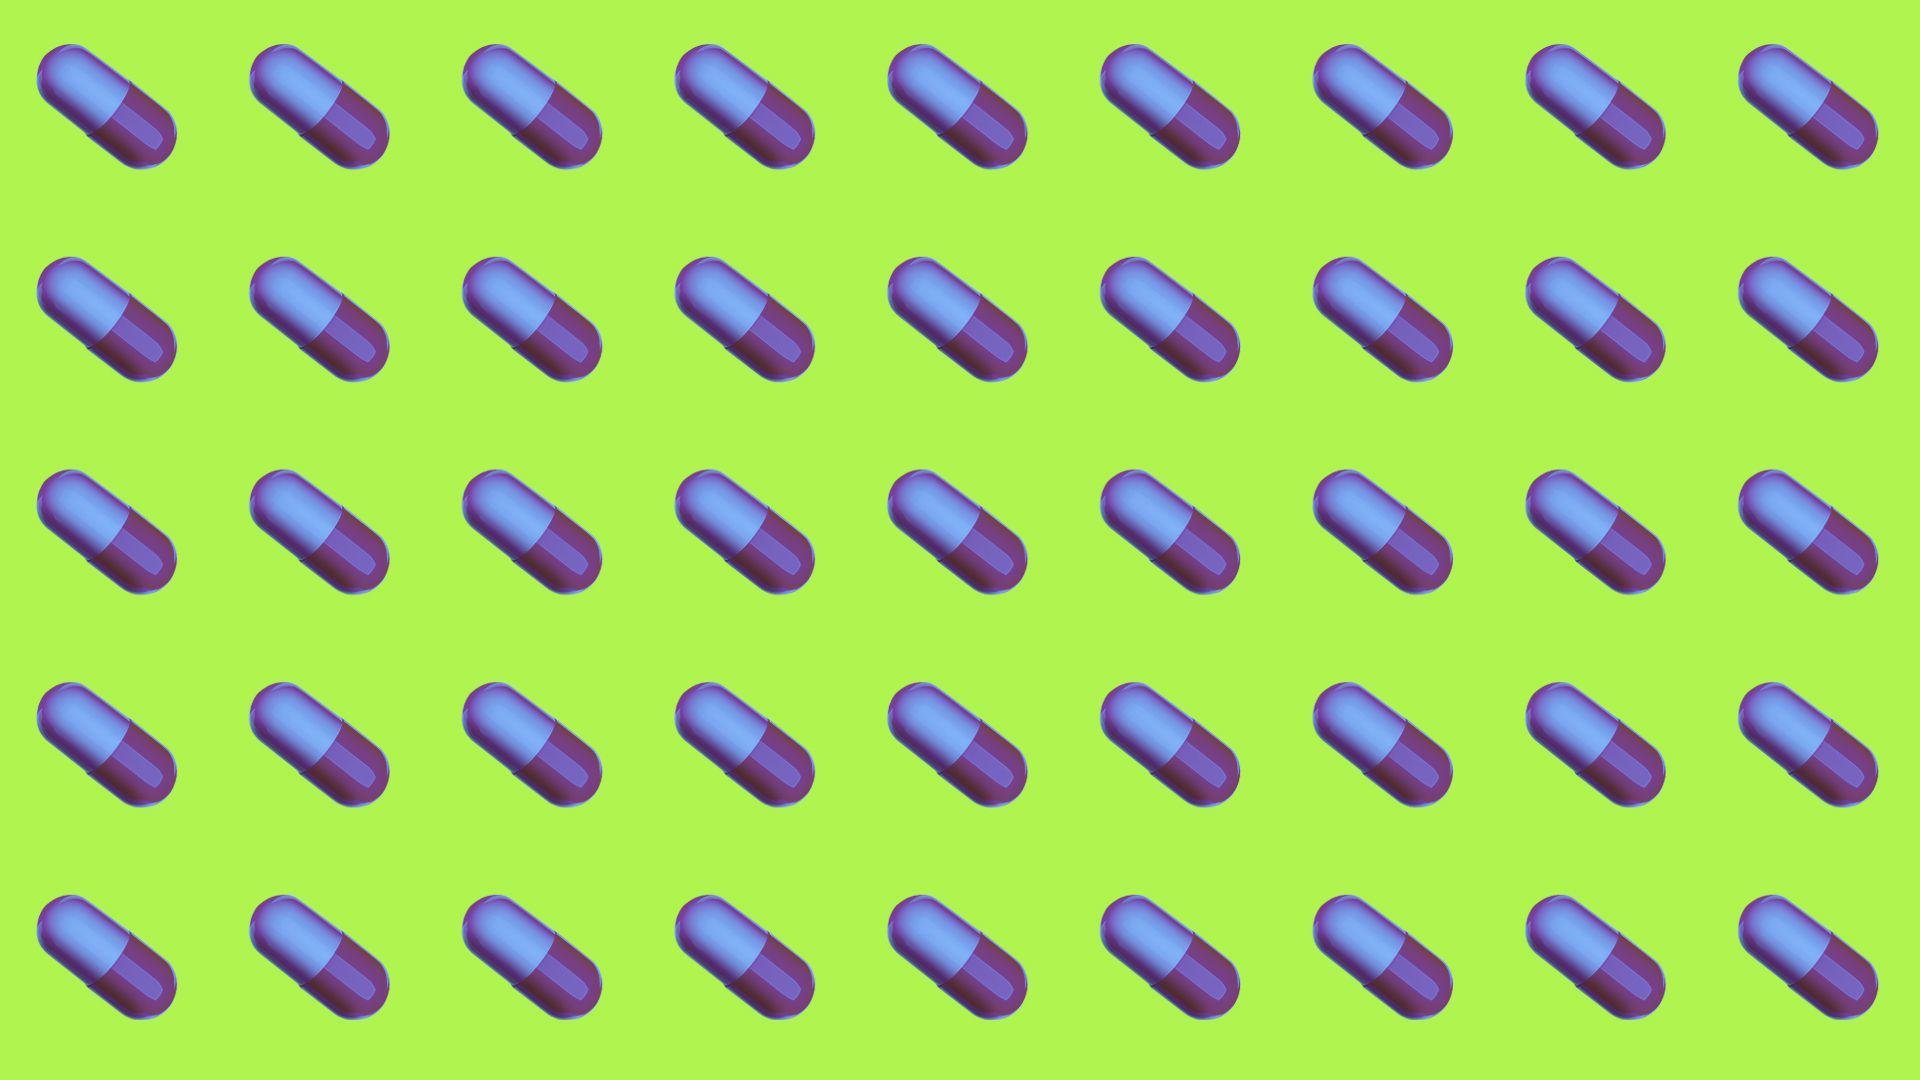 Illustration of a pattern of pills